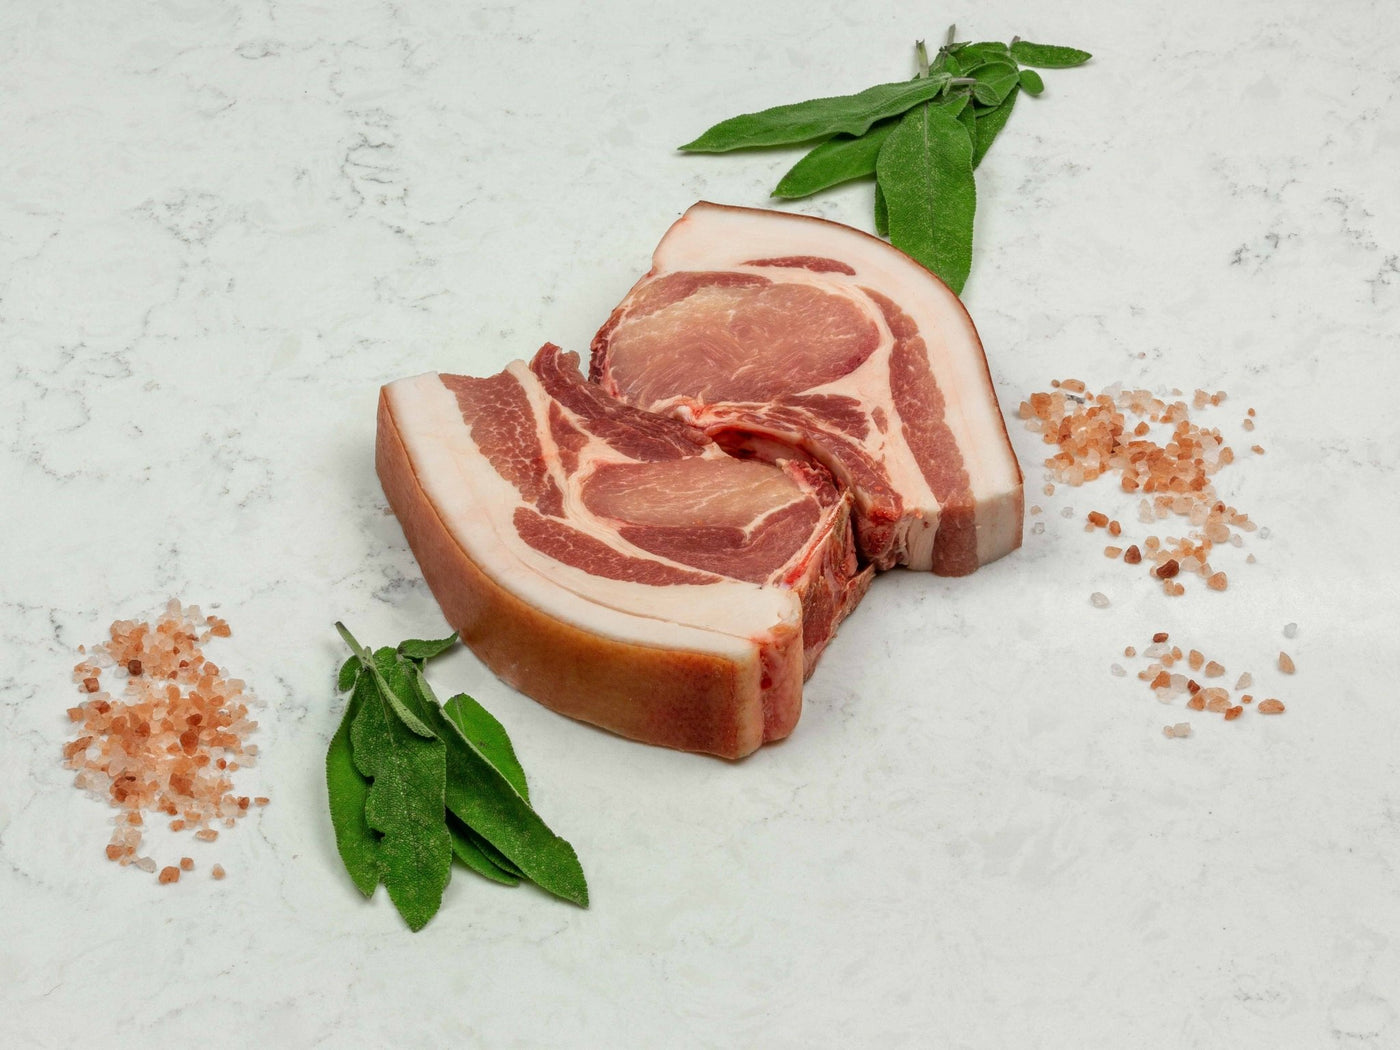 7 Day Dry-Aged, Free Range Pork Chop - Pork - Thomas Joseph Butchery - Ethical Dry-Aged Meat The Best Steak UK Thomas Joseph Butchery